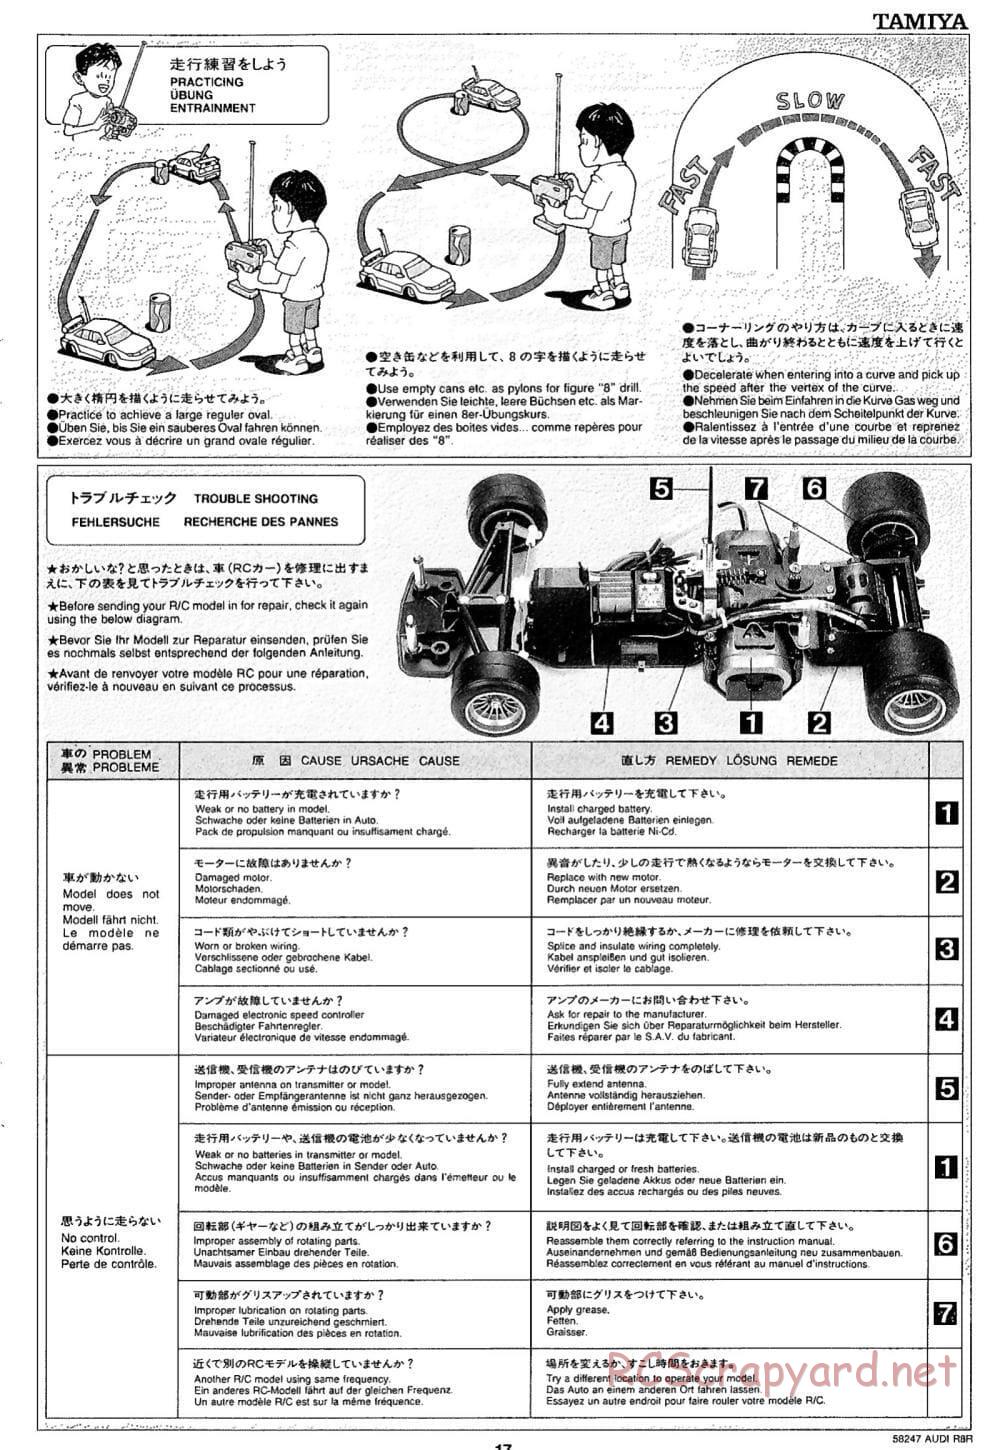 Tamiya - Audi R8R - F103LM Chassis - Manual - Page 17